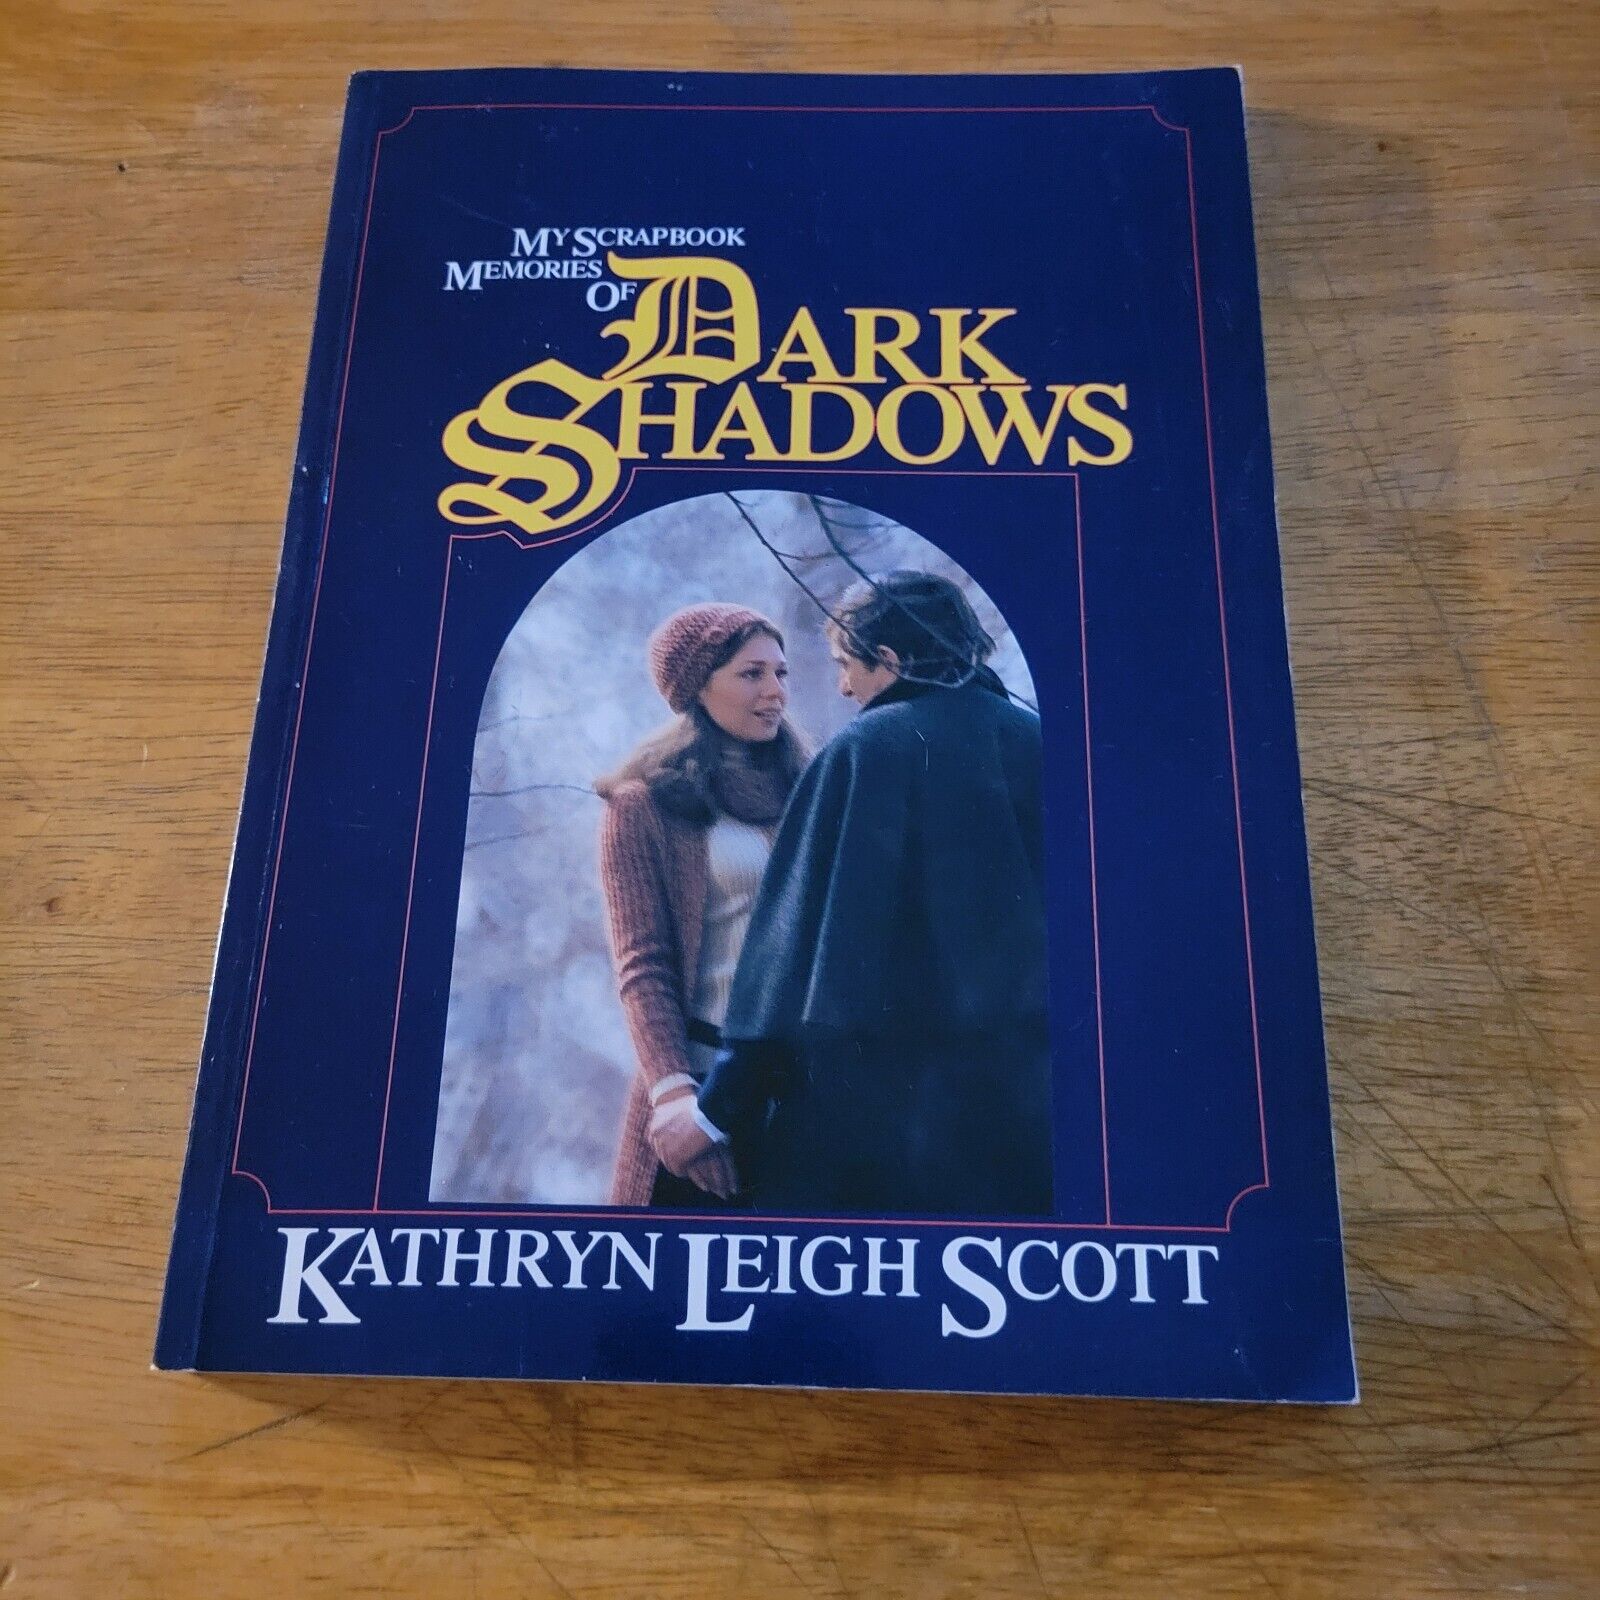 My Scrapbook Memories of Dark Shadows by Kathryn L. Scott 1987 softcover book